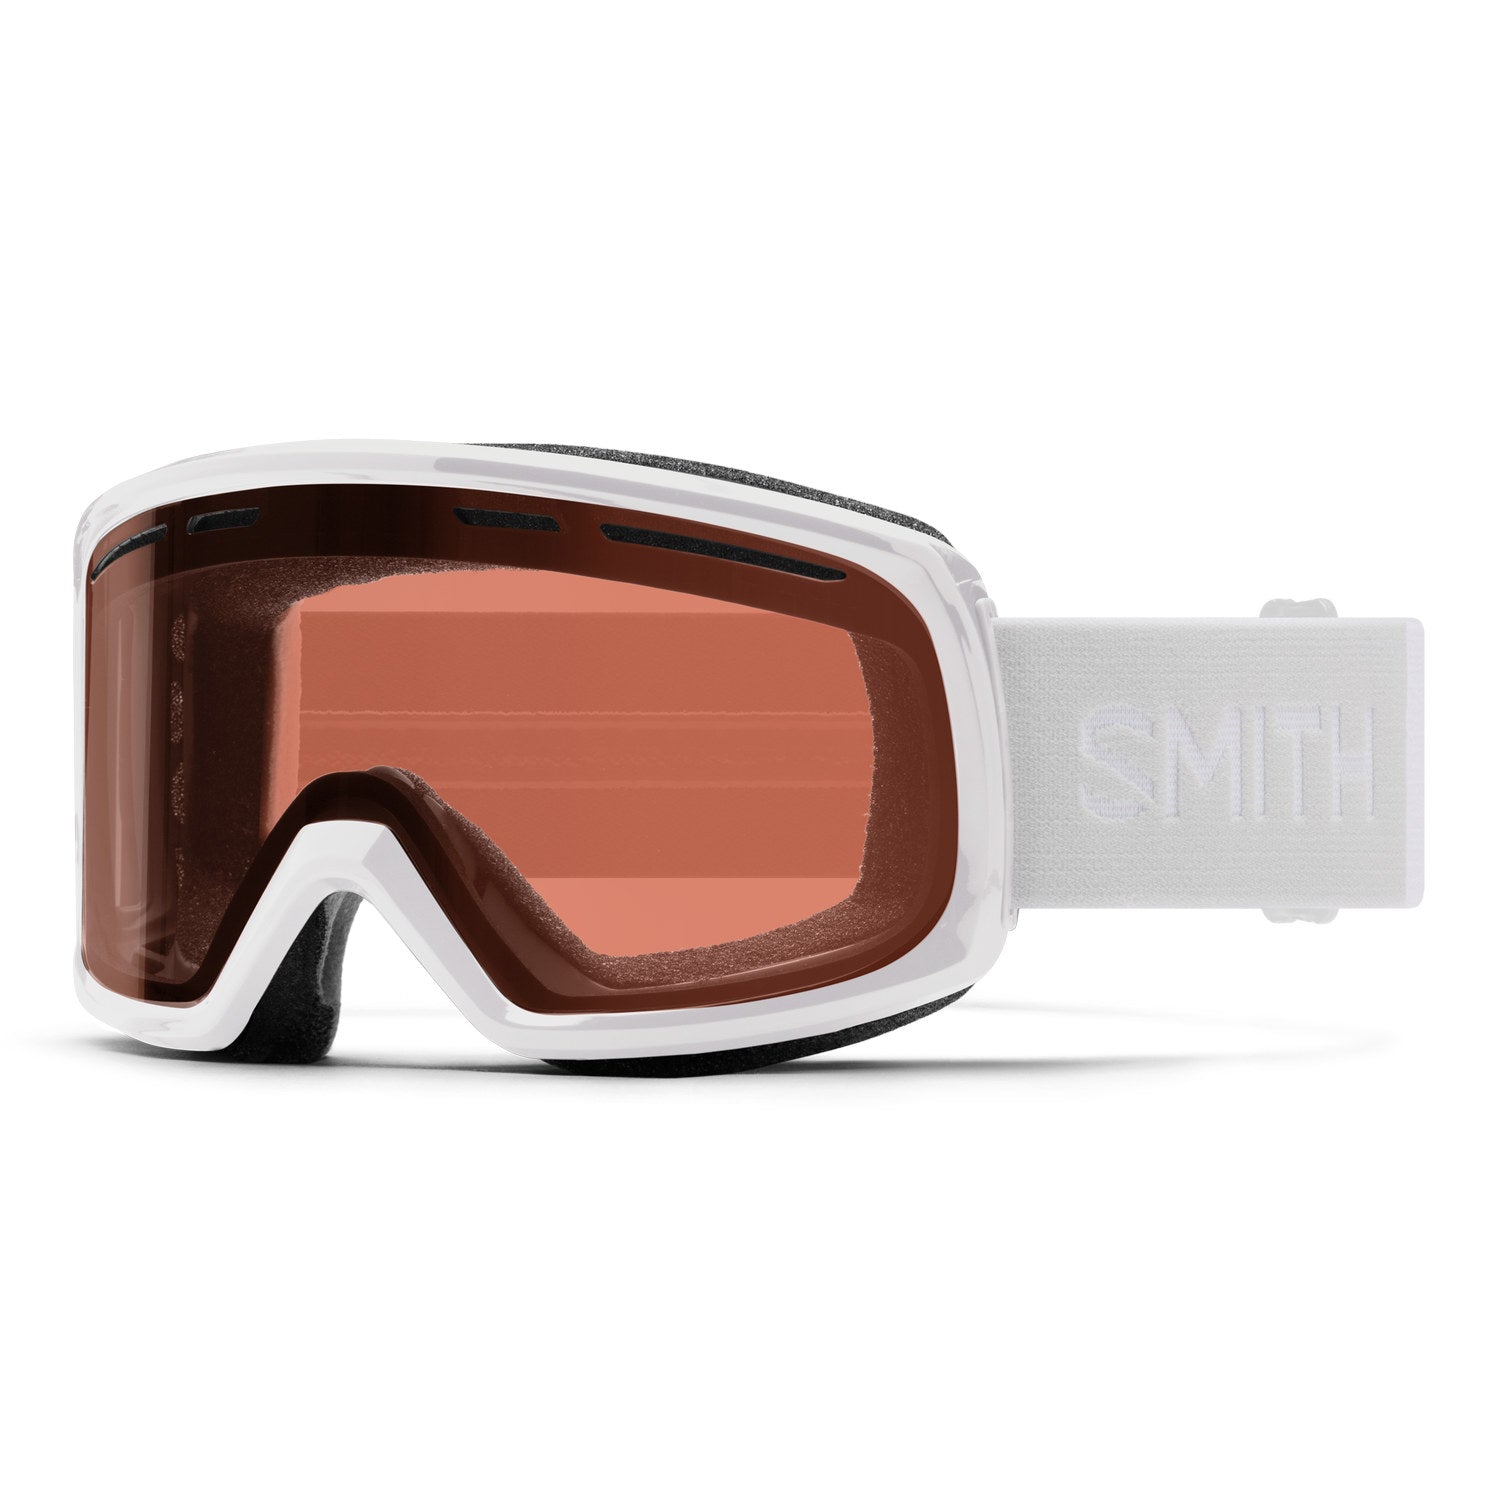 Smith Range Snow Goggle - OpenBox Default Title - Smith Snow Goggles